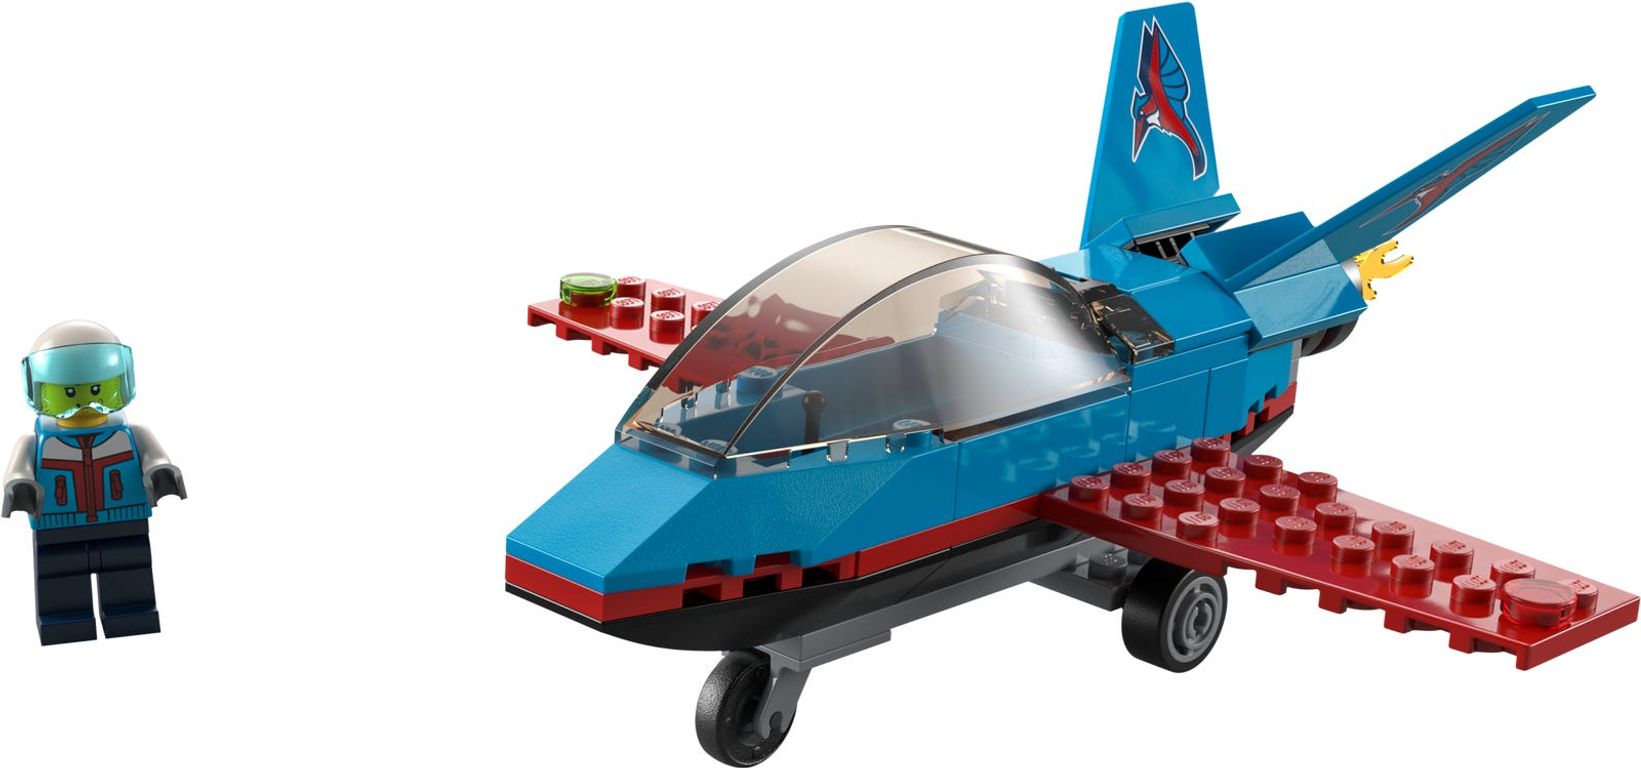 LEGO® City Stunt Plane components